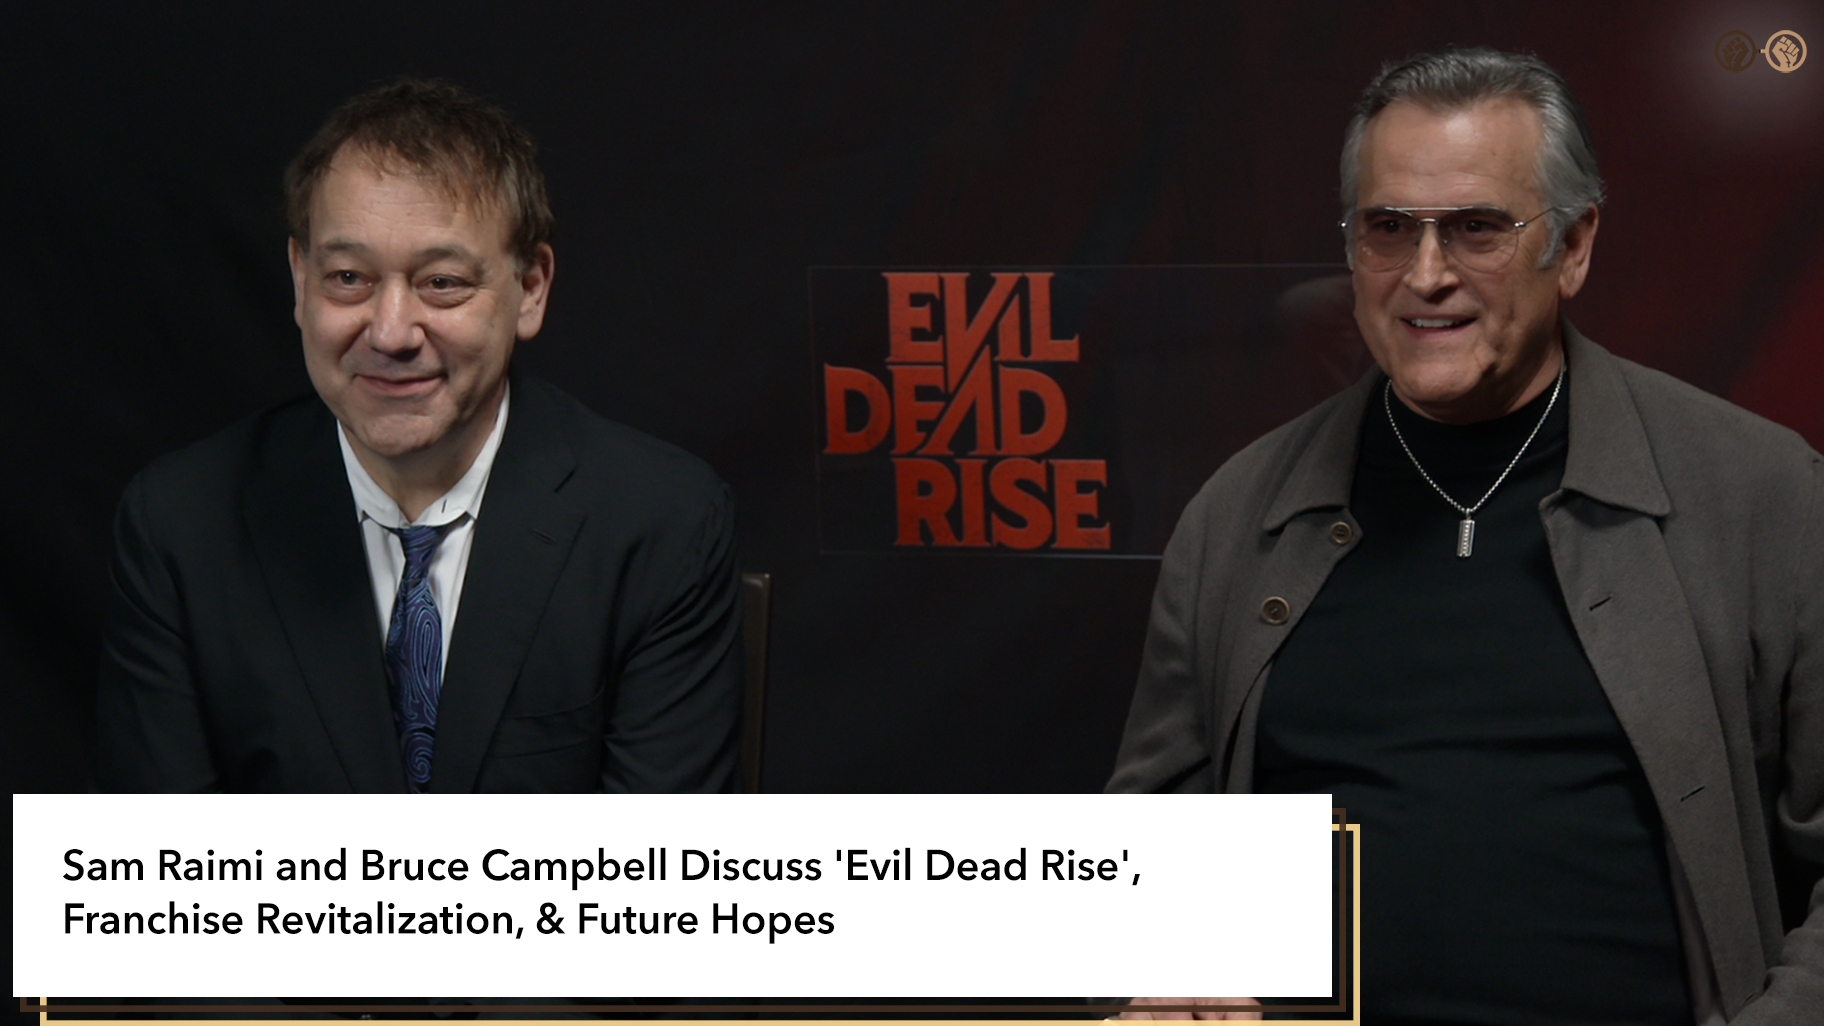 Sam Raimi and Bruce Campbell Discuss ‘Evil Dead Rise’, Franchise Revitalization & Future Hopes – Interview